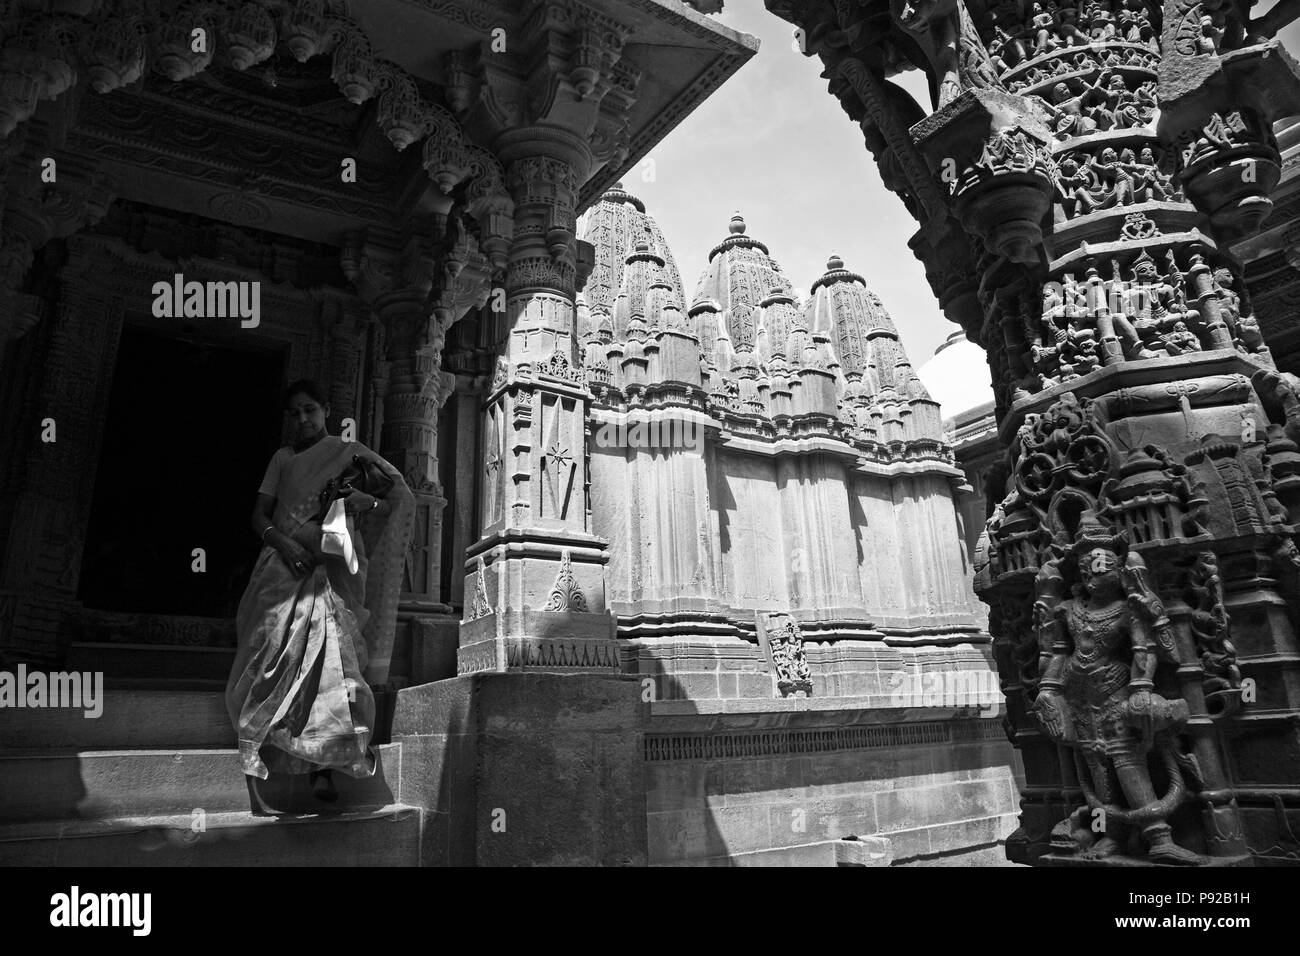 Entry of the CHANDRAPRABHU JAIN TEMPLE as seen inside the JAISALMER FORT - RAJASTHAN, INDIA Stock Photo